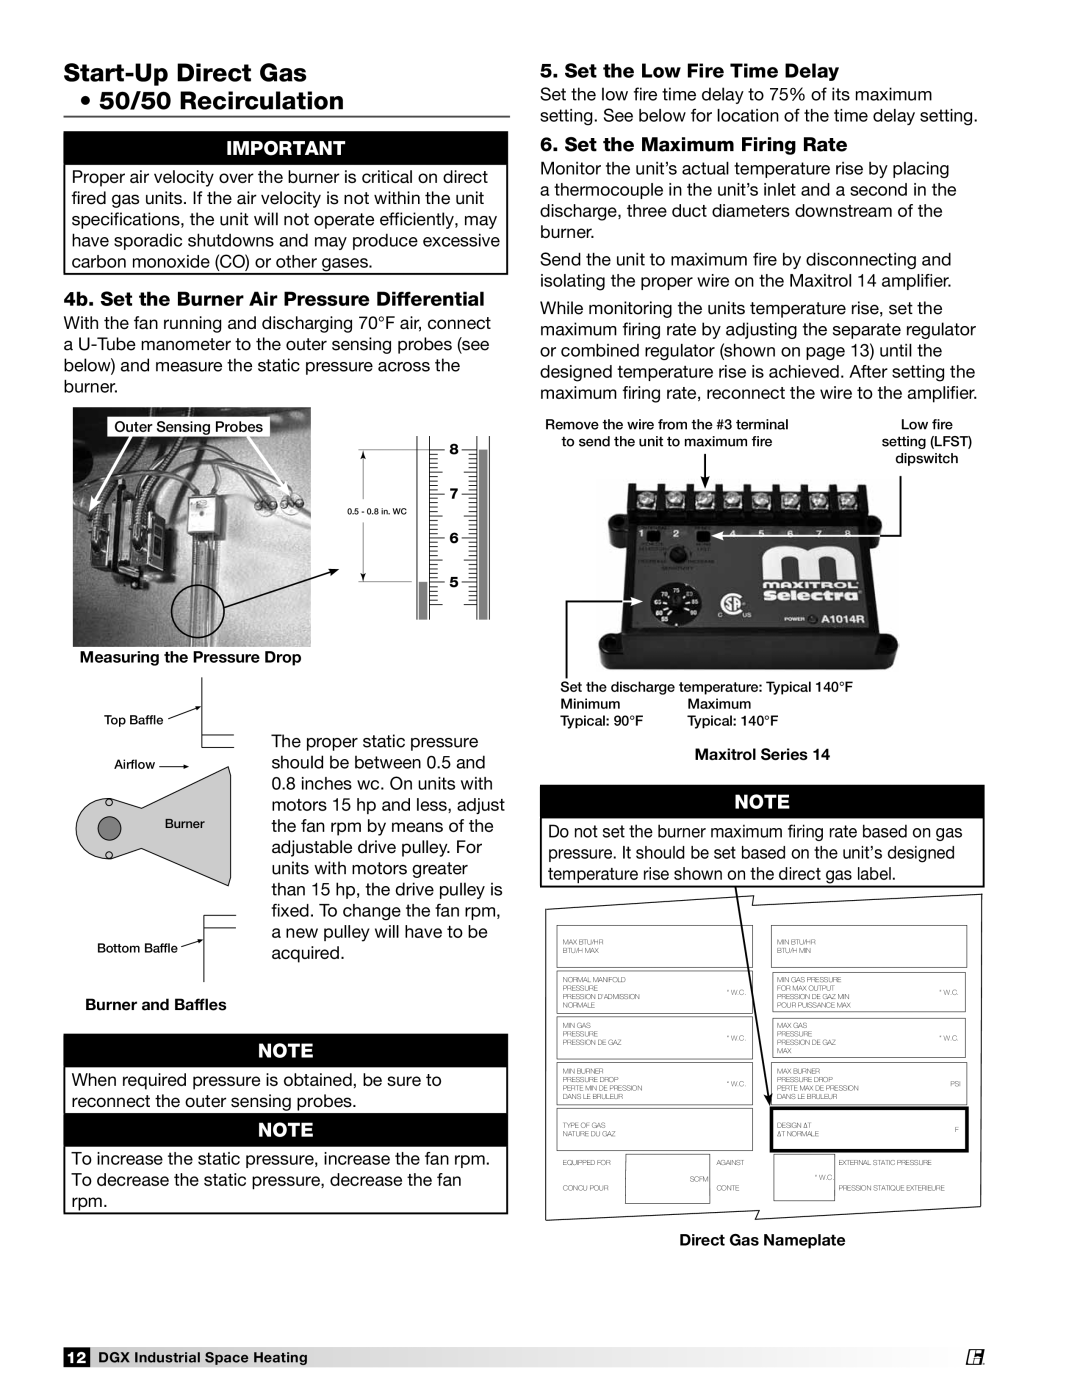 Greenheck Fan Part #470655 manual Start-UpDirect Gas 50/50 Recirculation, 4b. Set the Burner Air Pressure Differential 